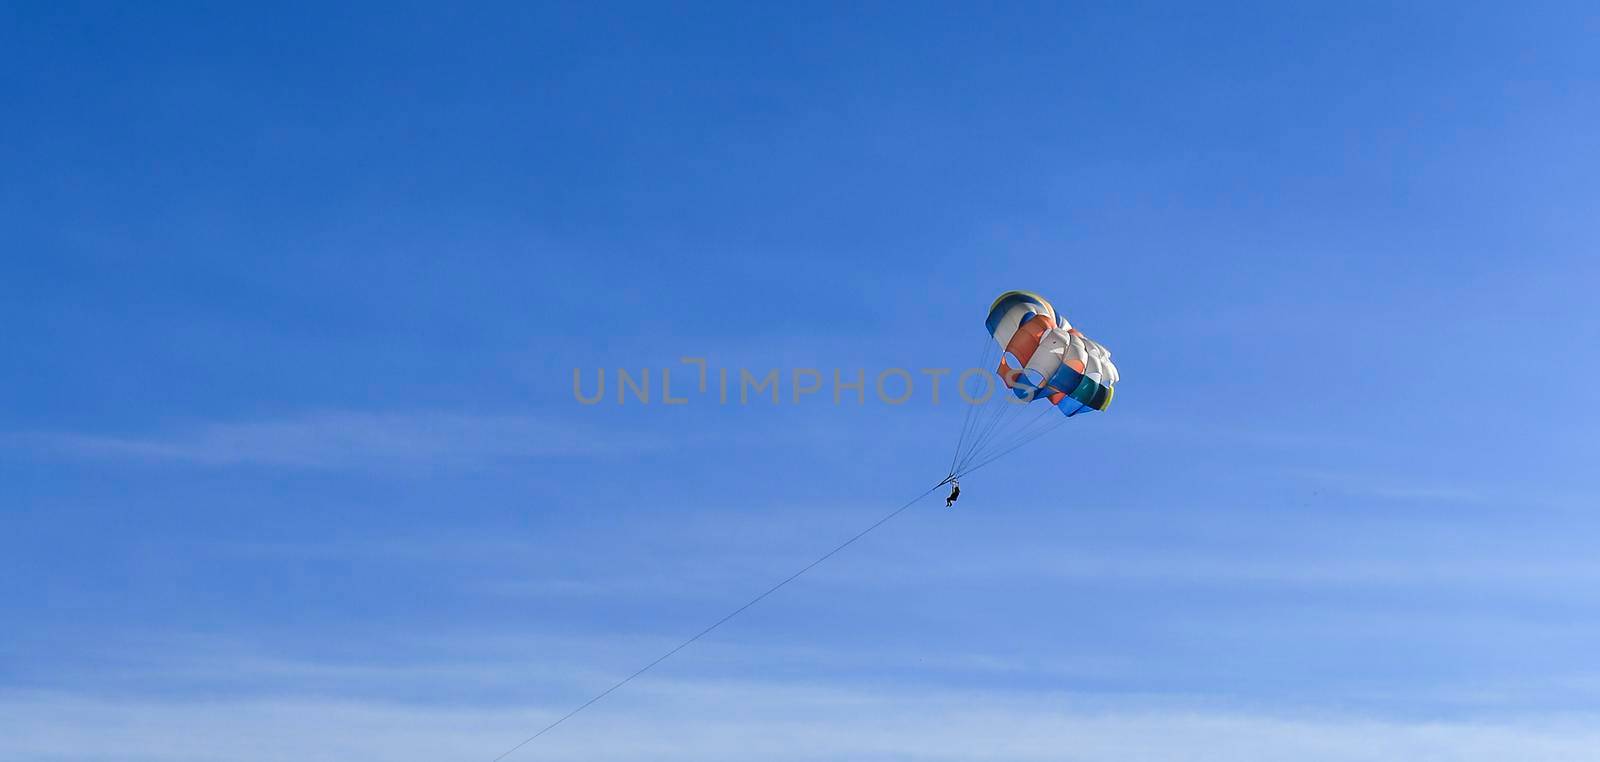 People parasailing on Benidorm beach under blue sky by soniabonet